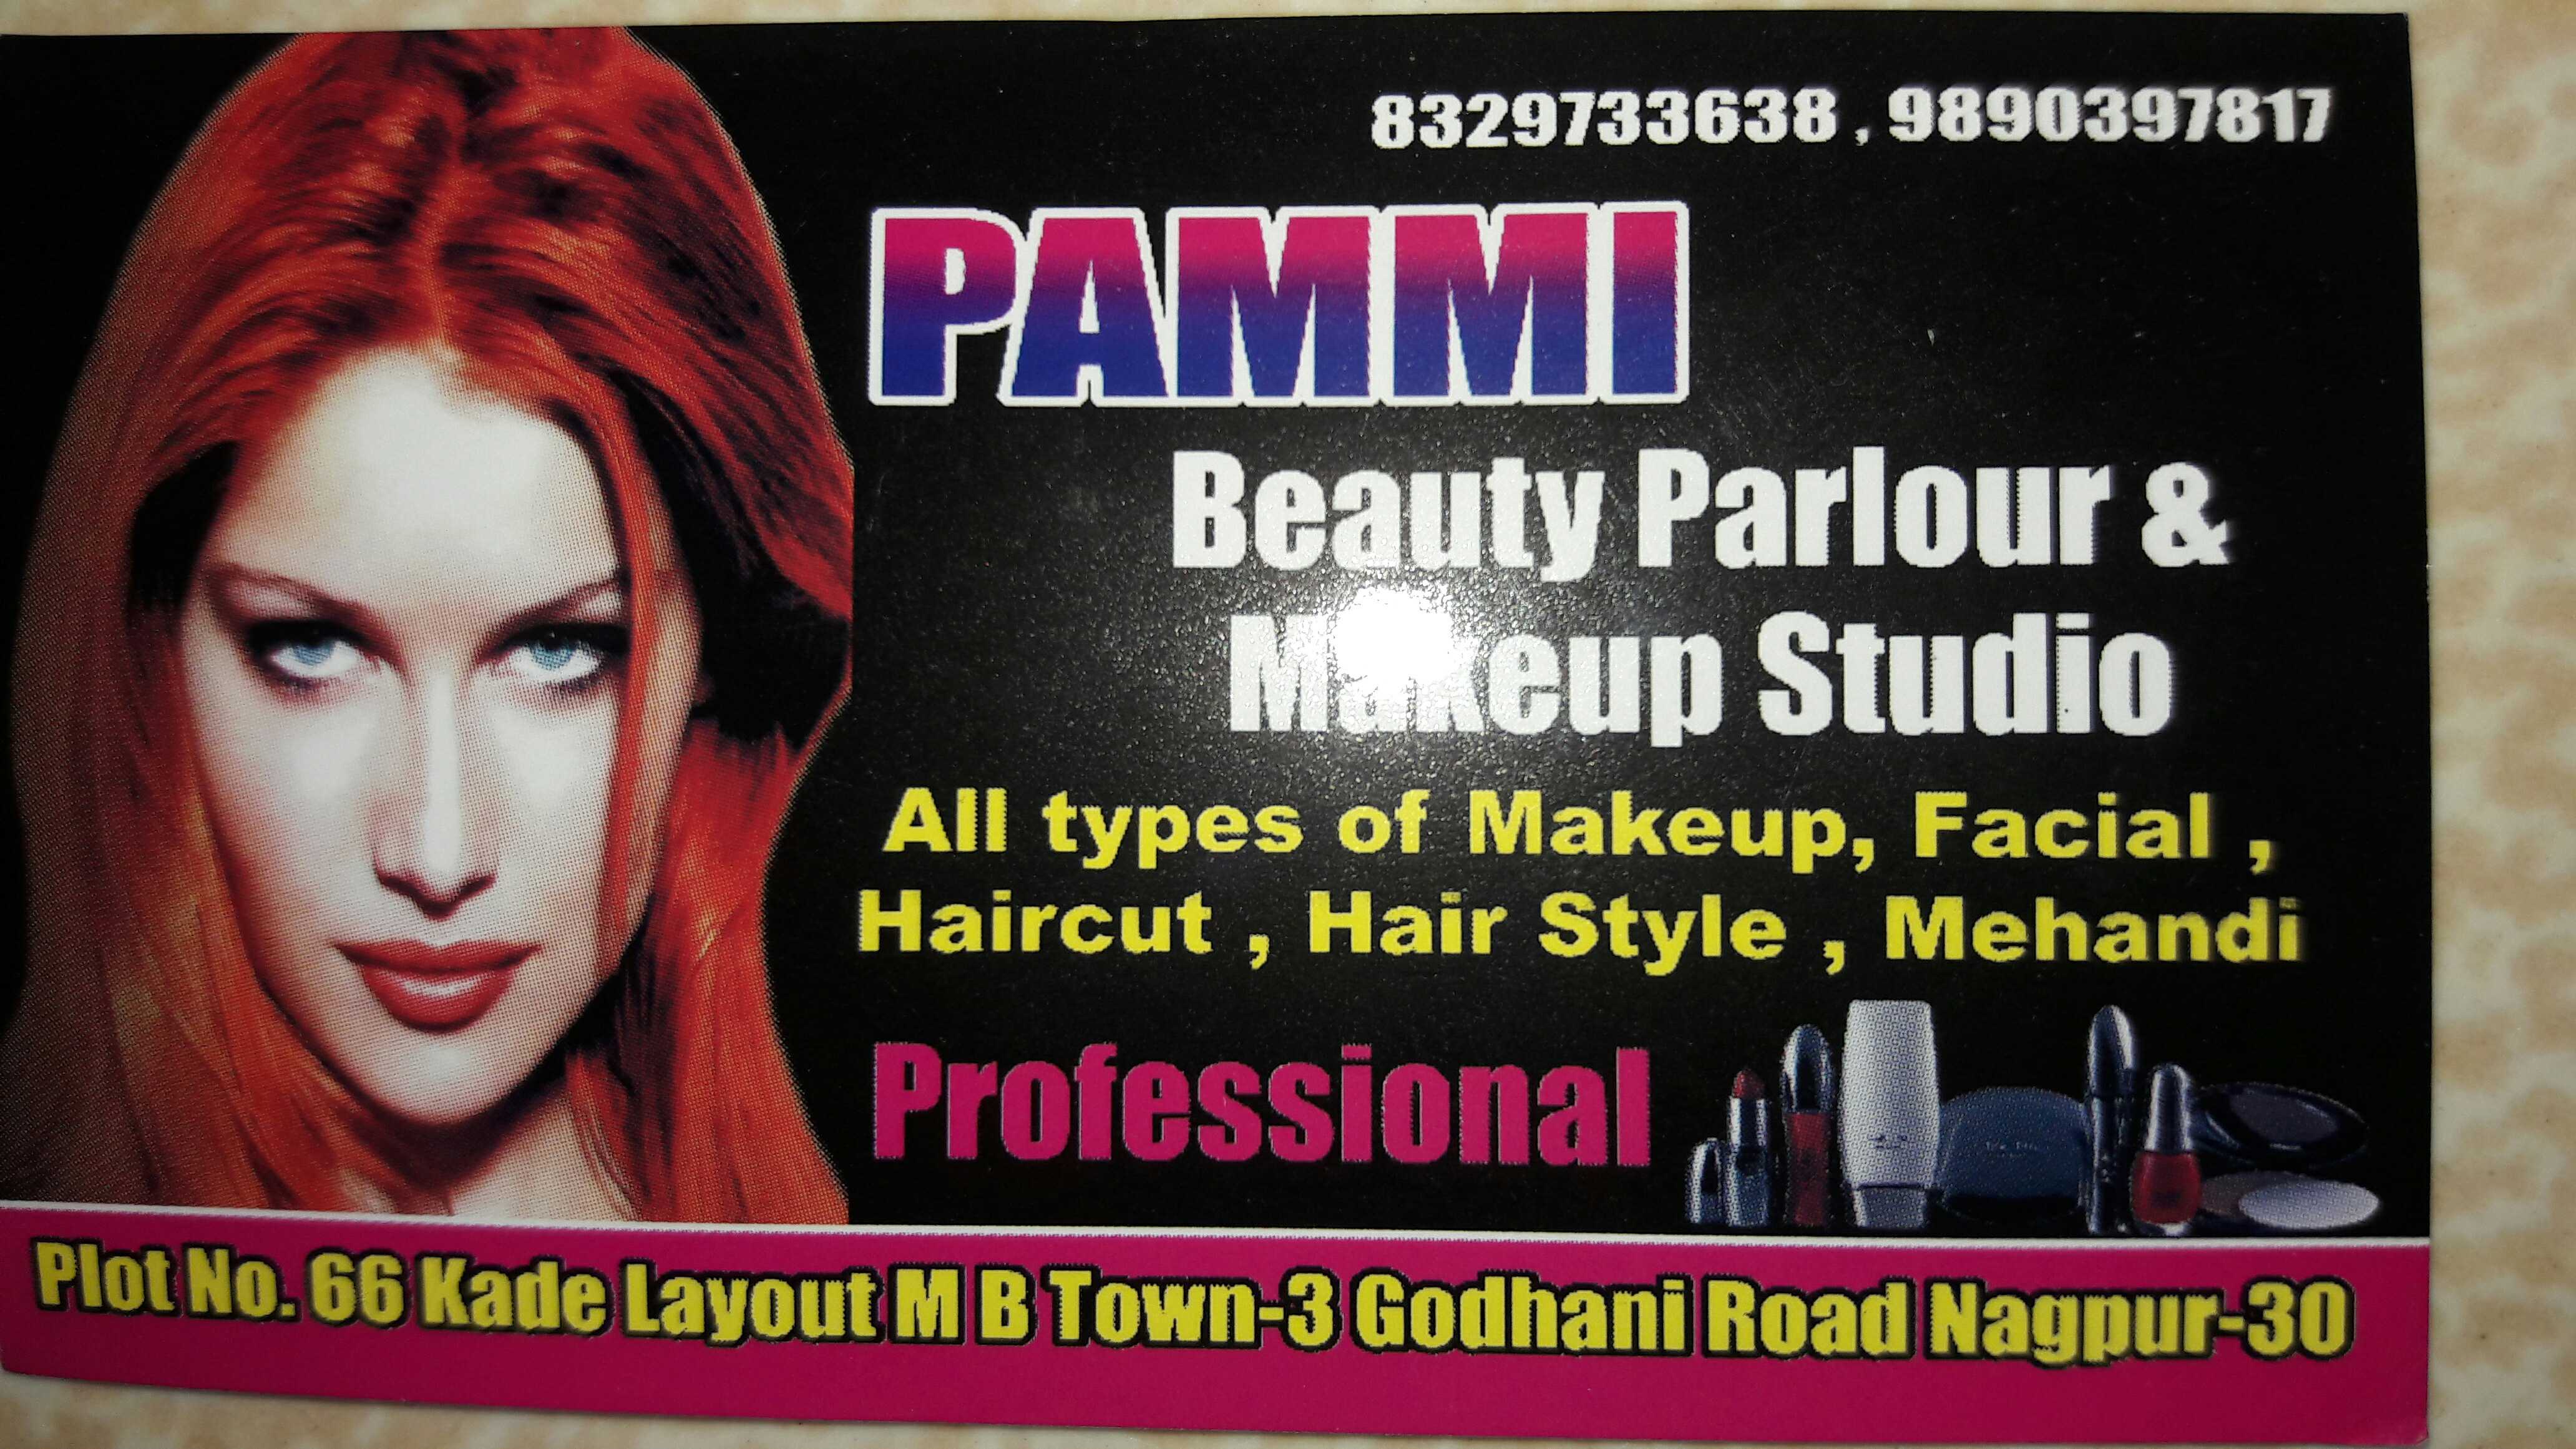 Top 10 Beauty Parlour in Nagpur, Salons, Makeup Artist | Sulekha